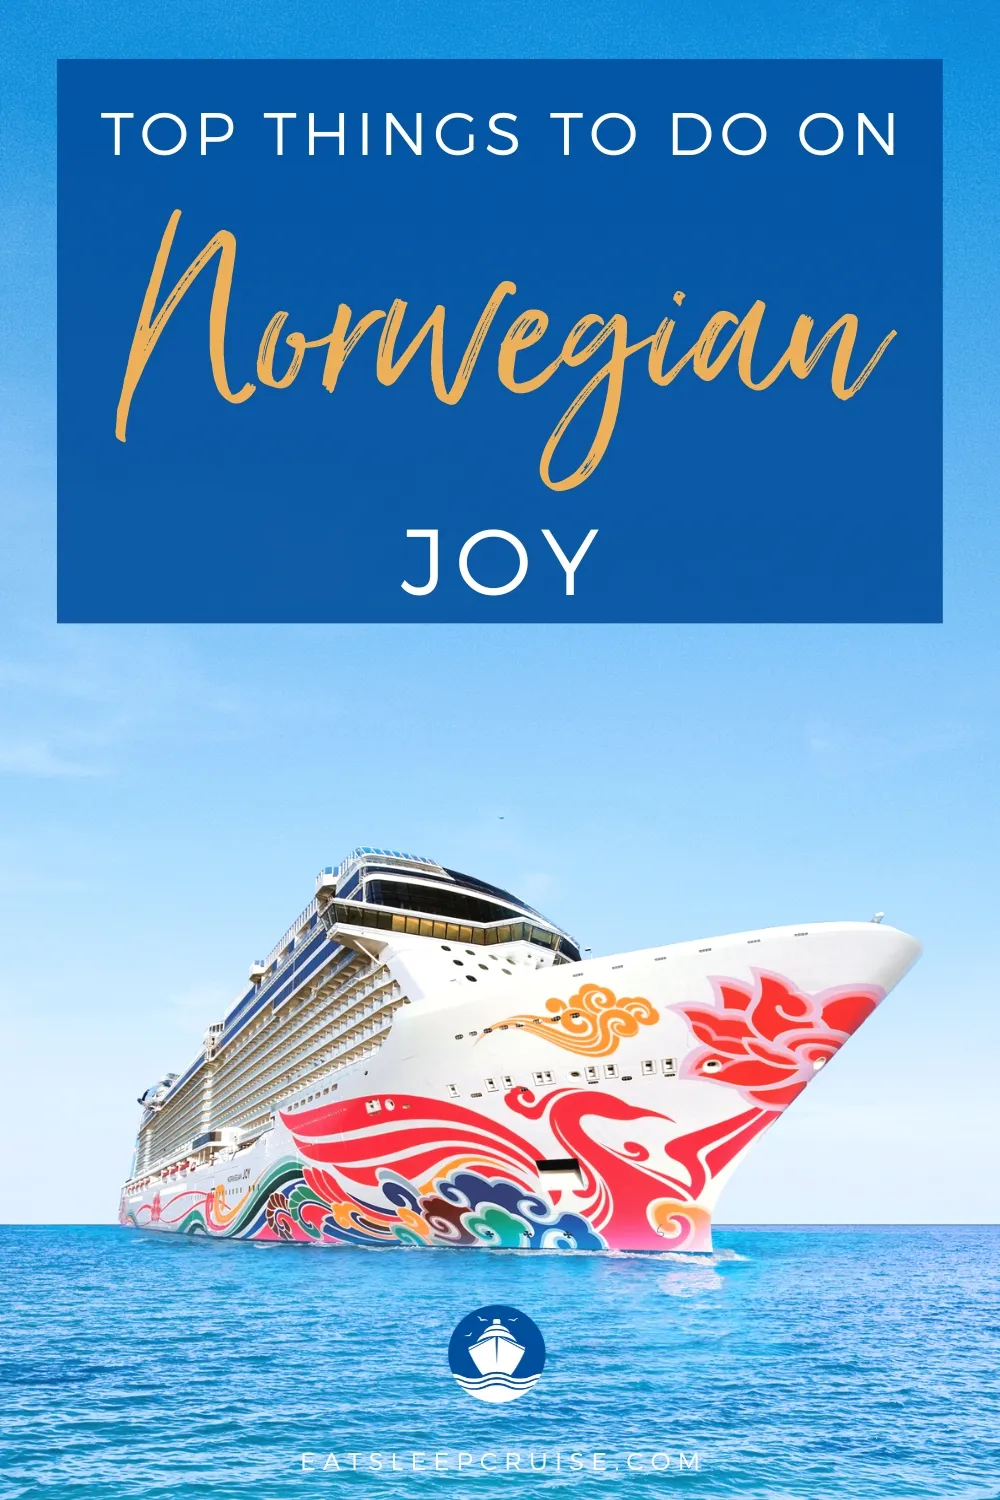 Top things to do on Norwegian Joy